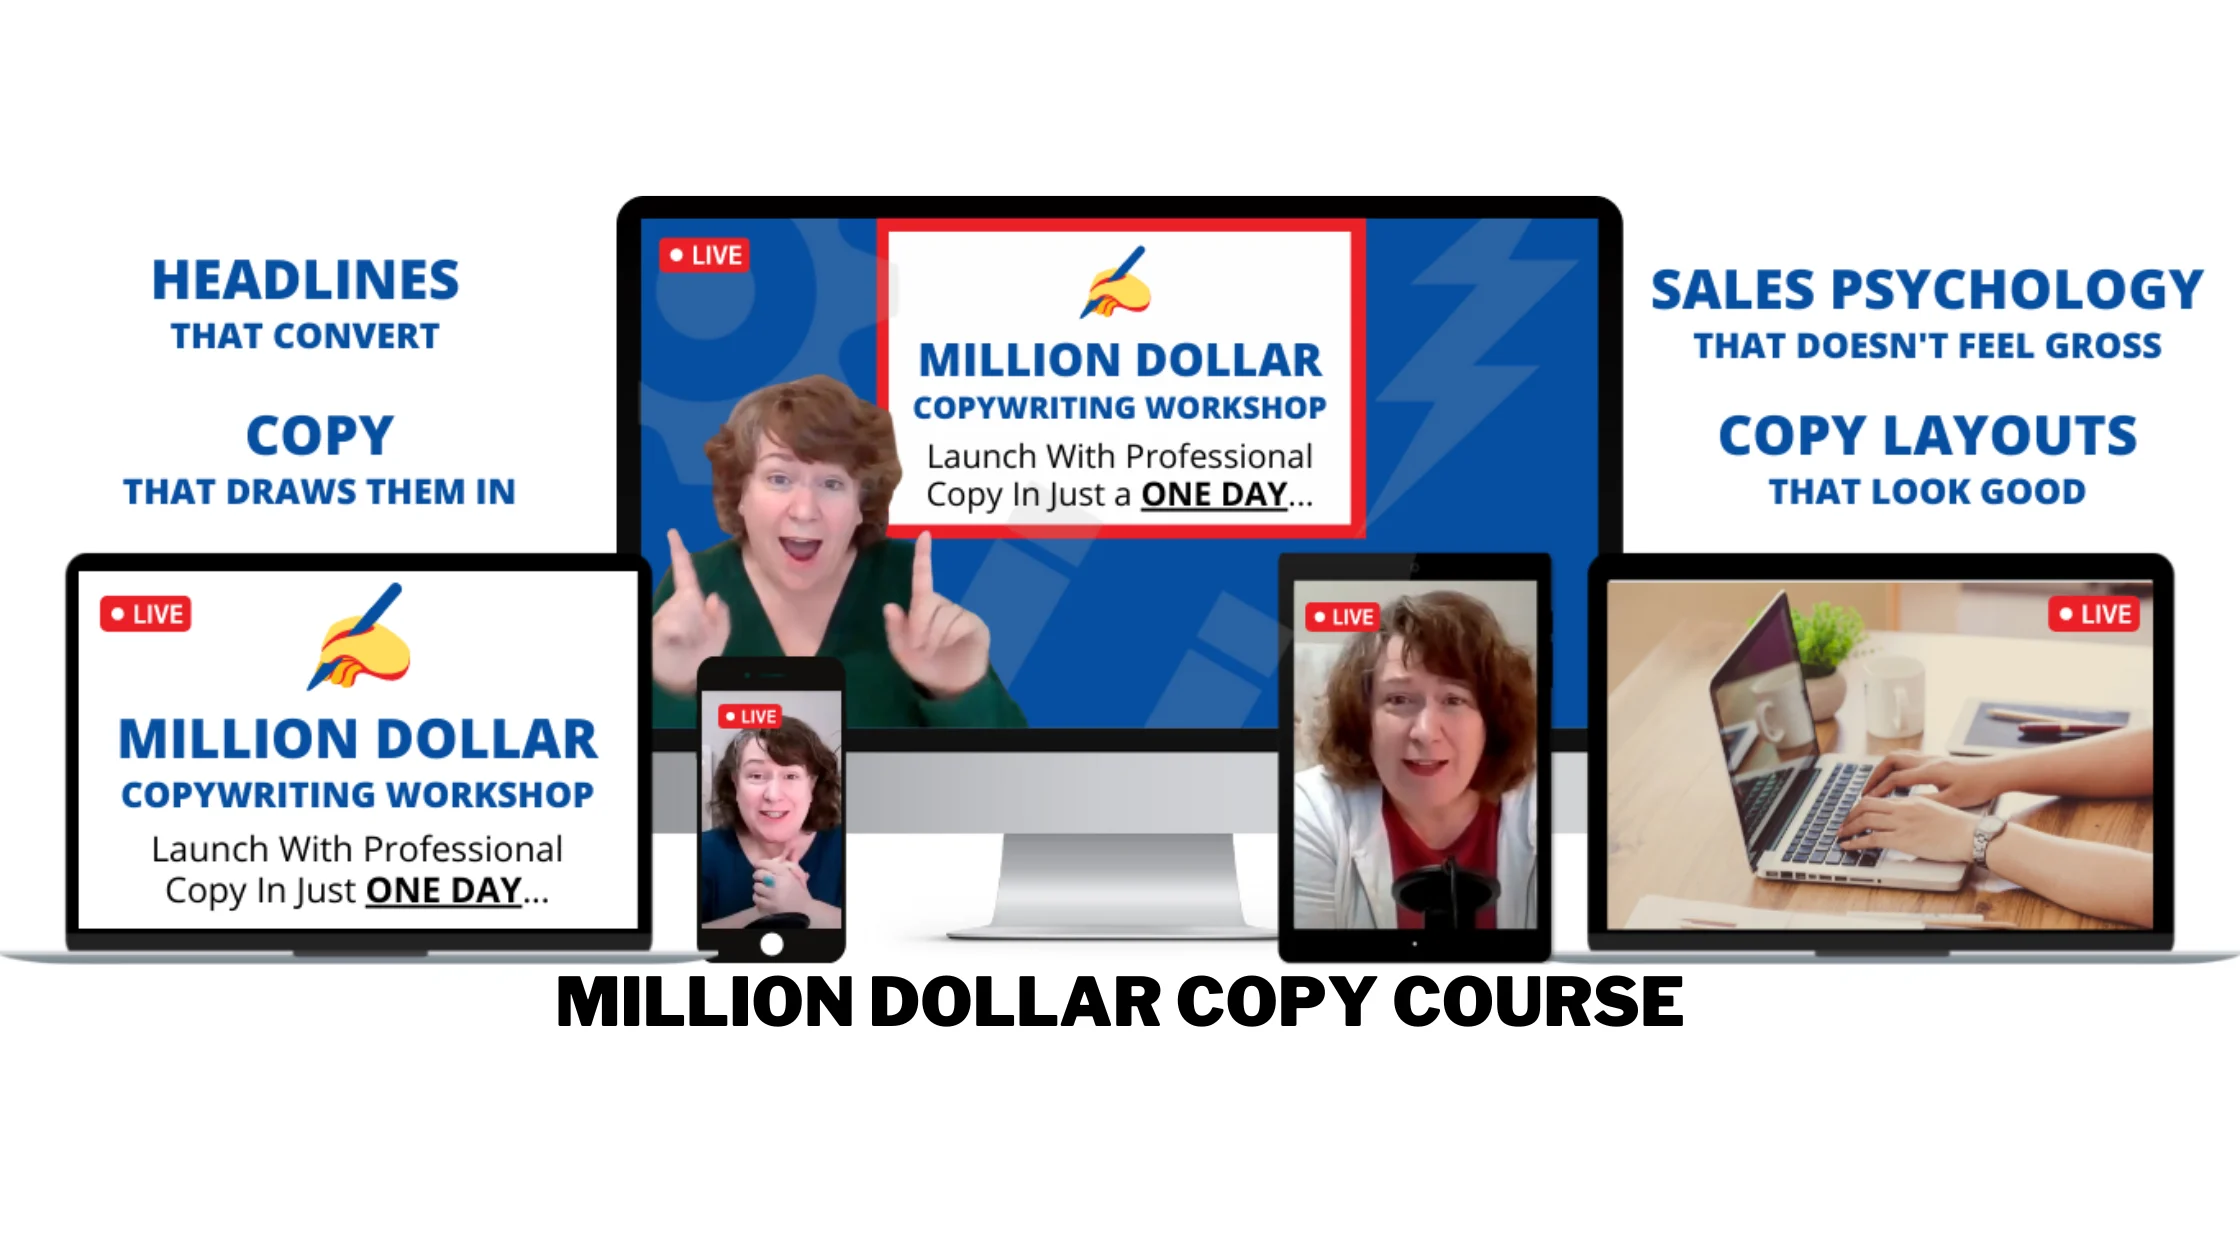  ‘Million Dollar Copy Course